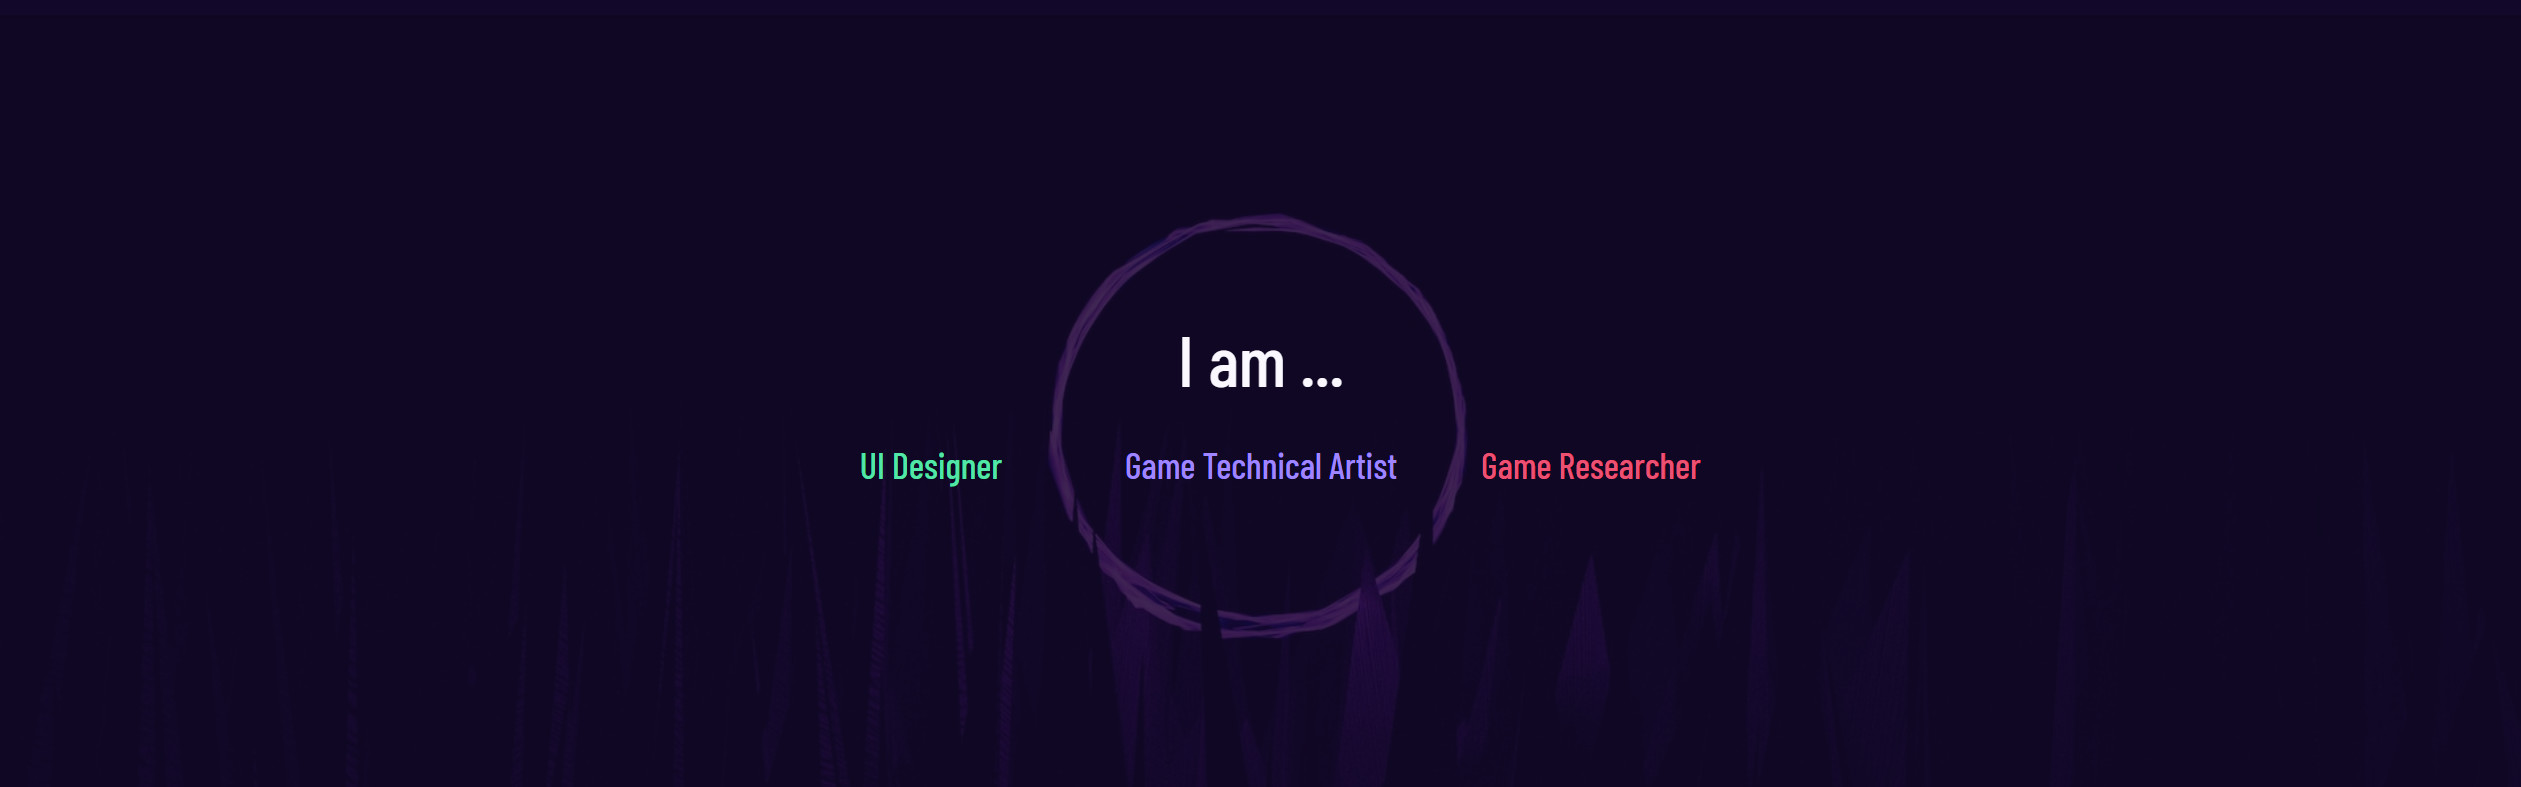 I am UI Designer, Game Technical Artistt